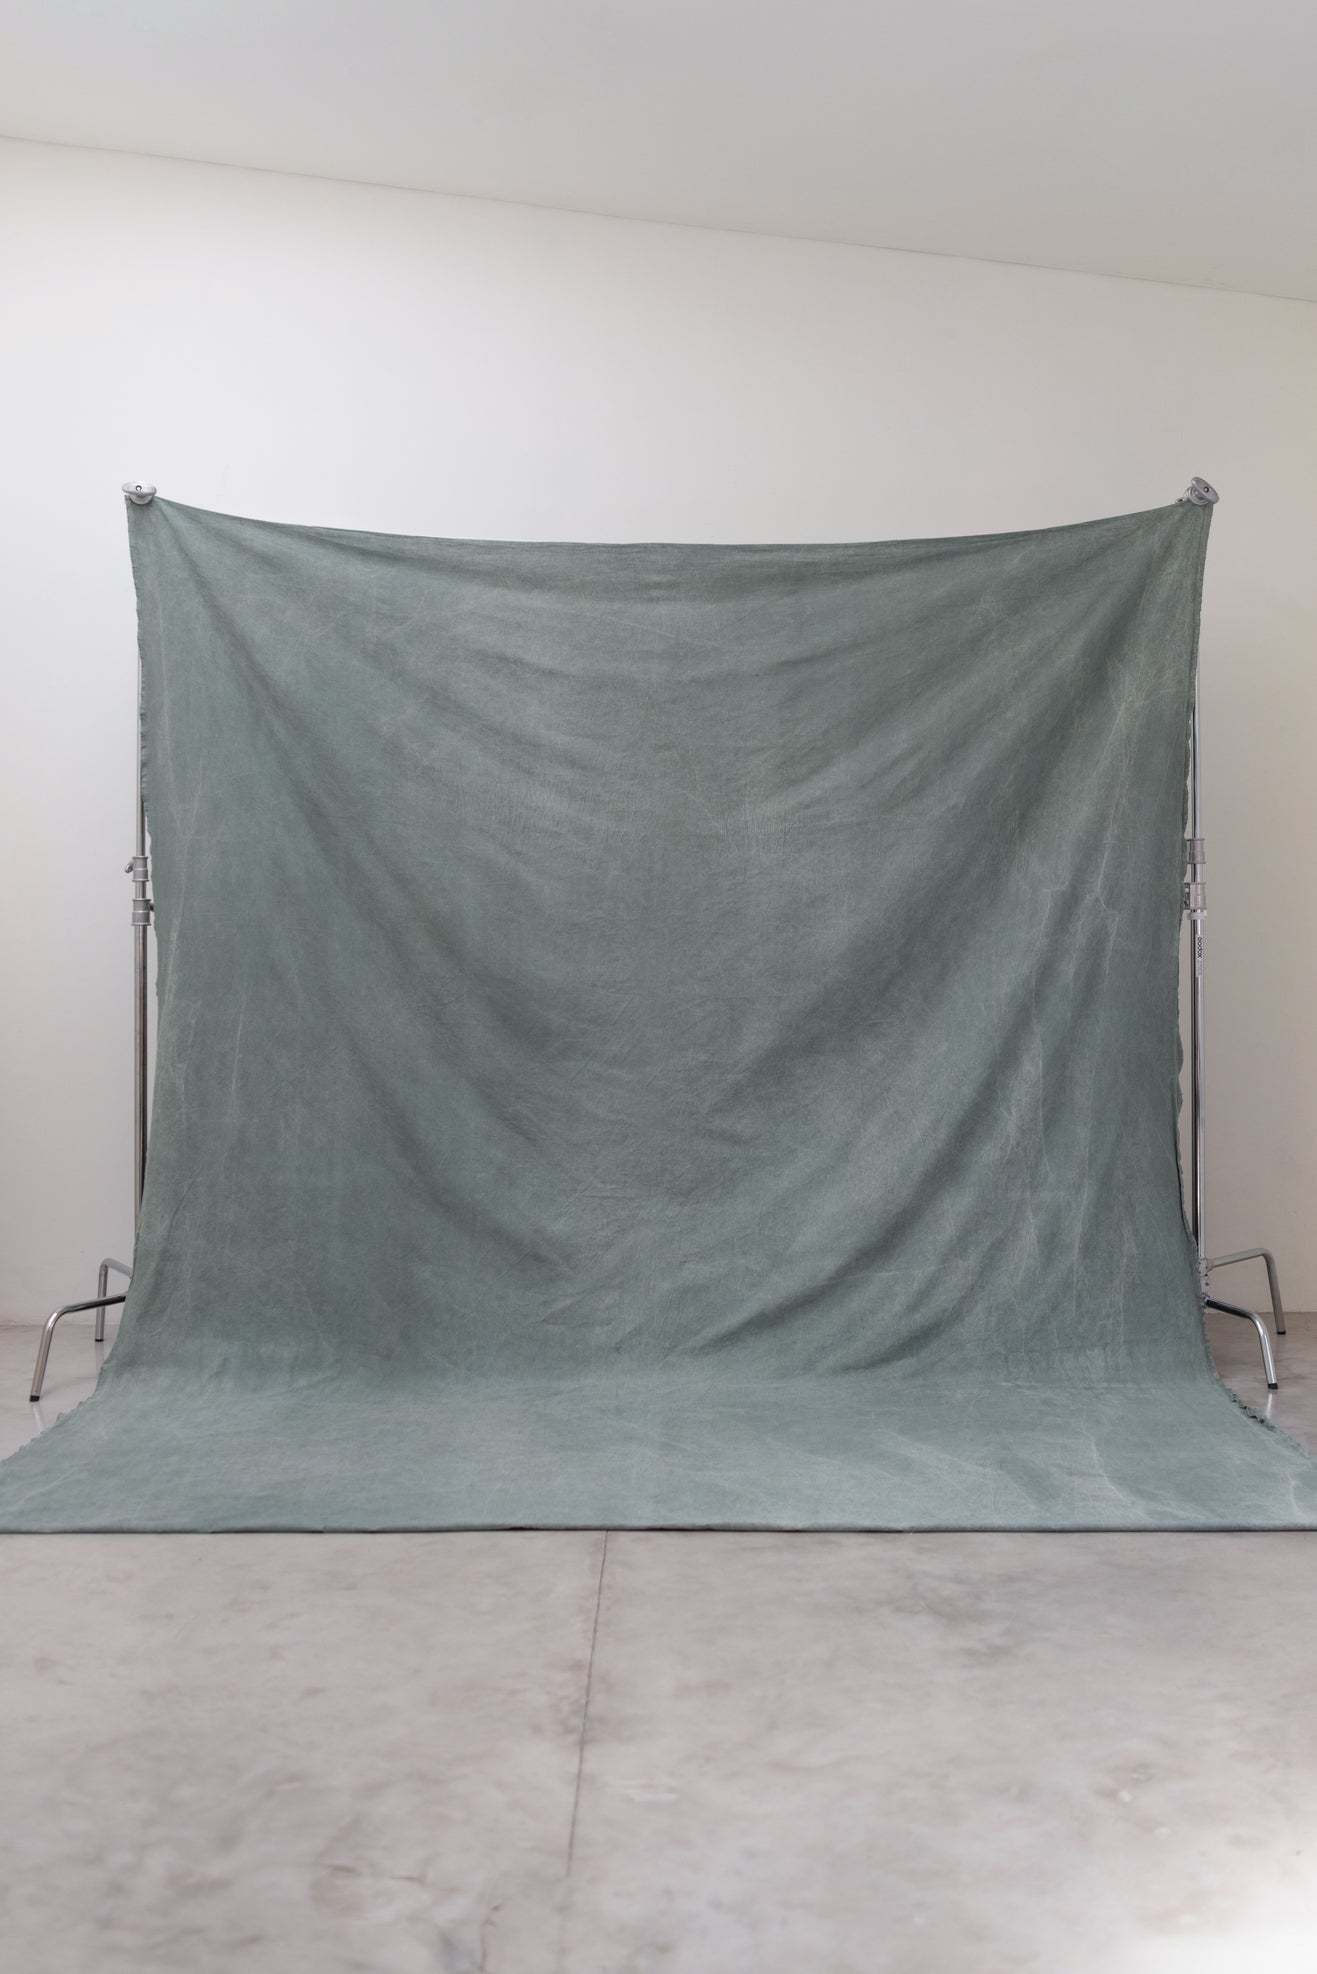 [3x6m] Canvas Backdrop Light Teal